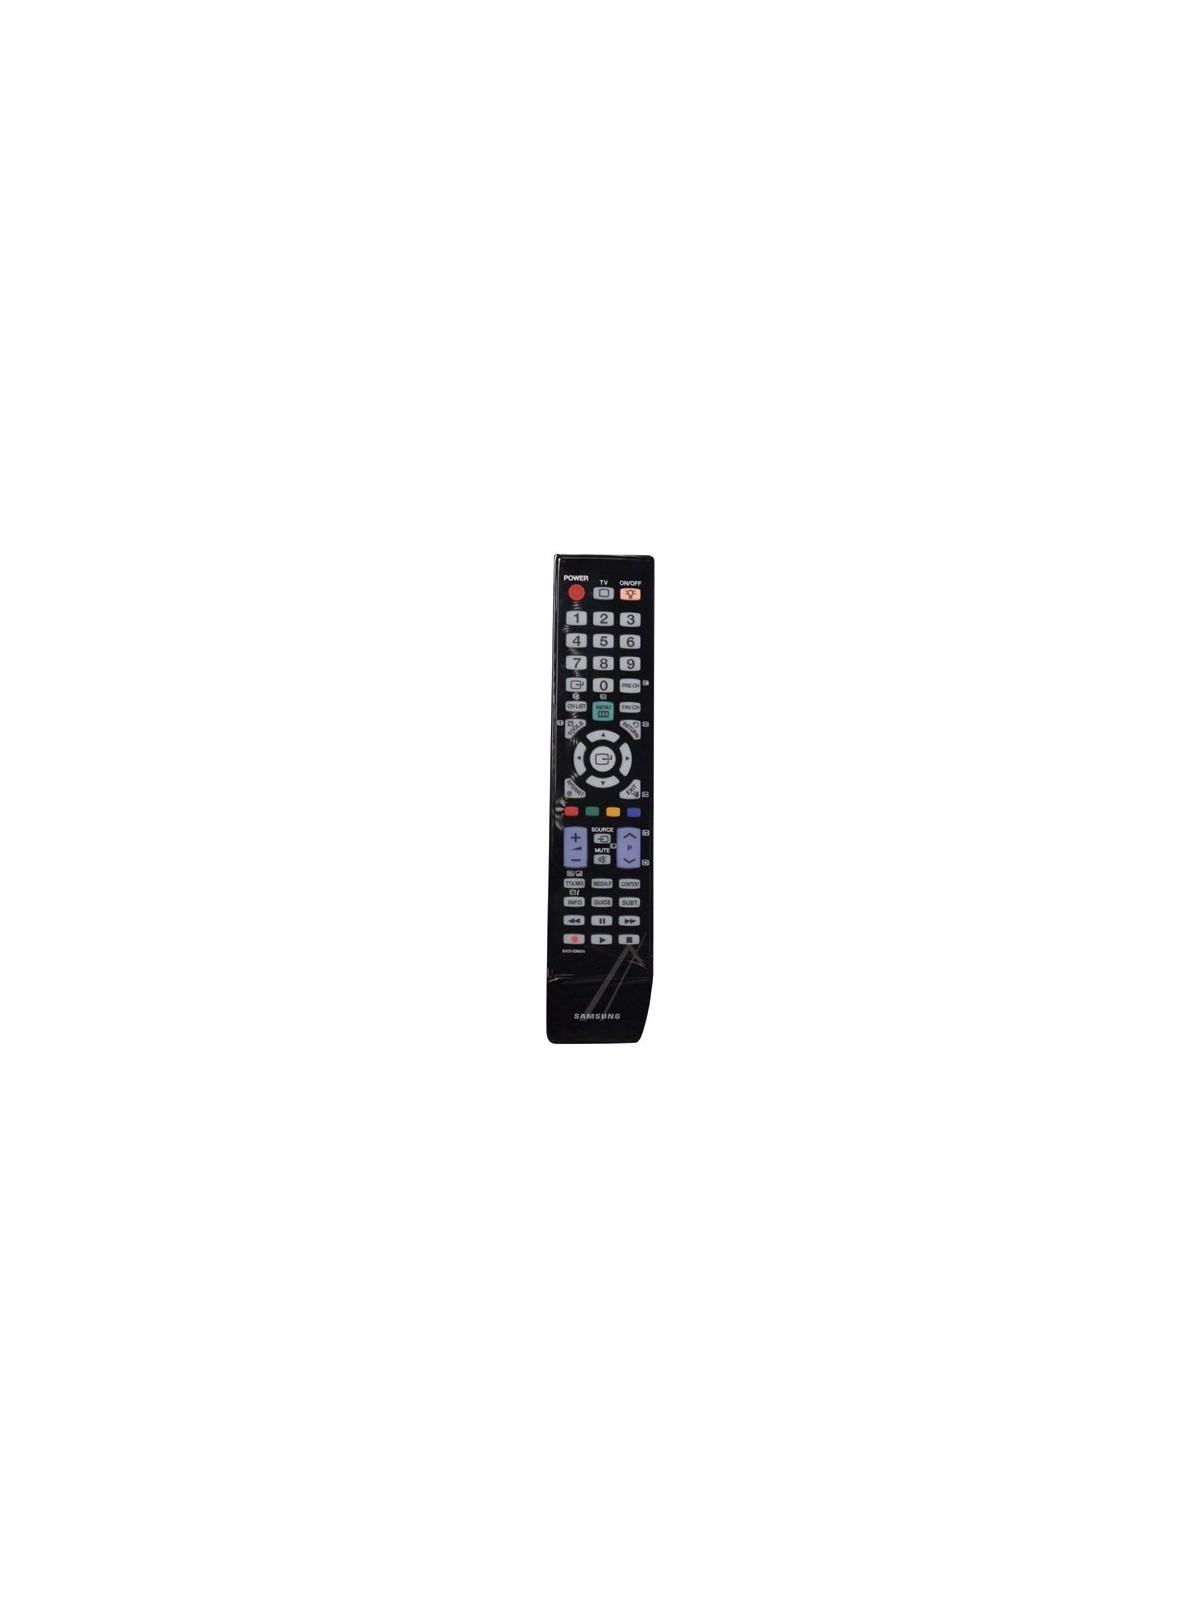 Télécommande Samsung UE46B6000 - Ecran lcd